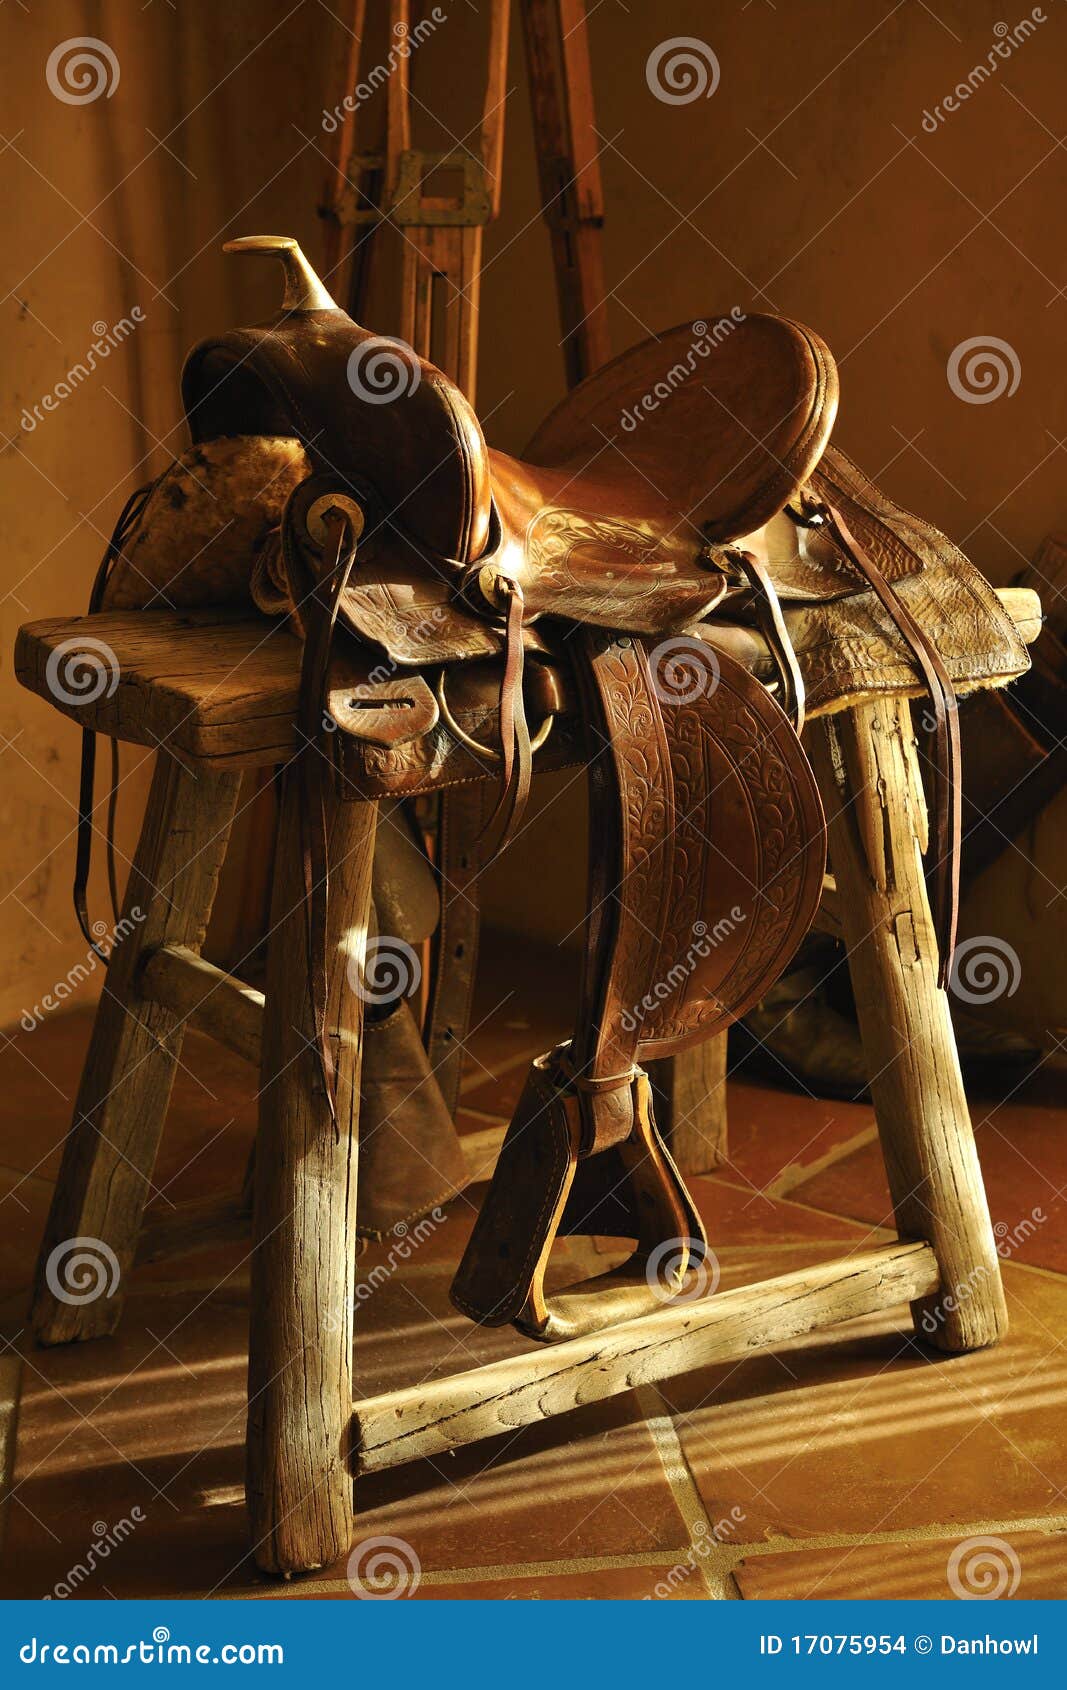 authentic leather saddle